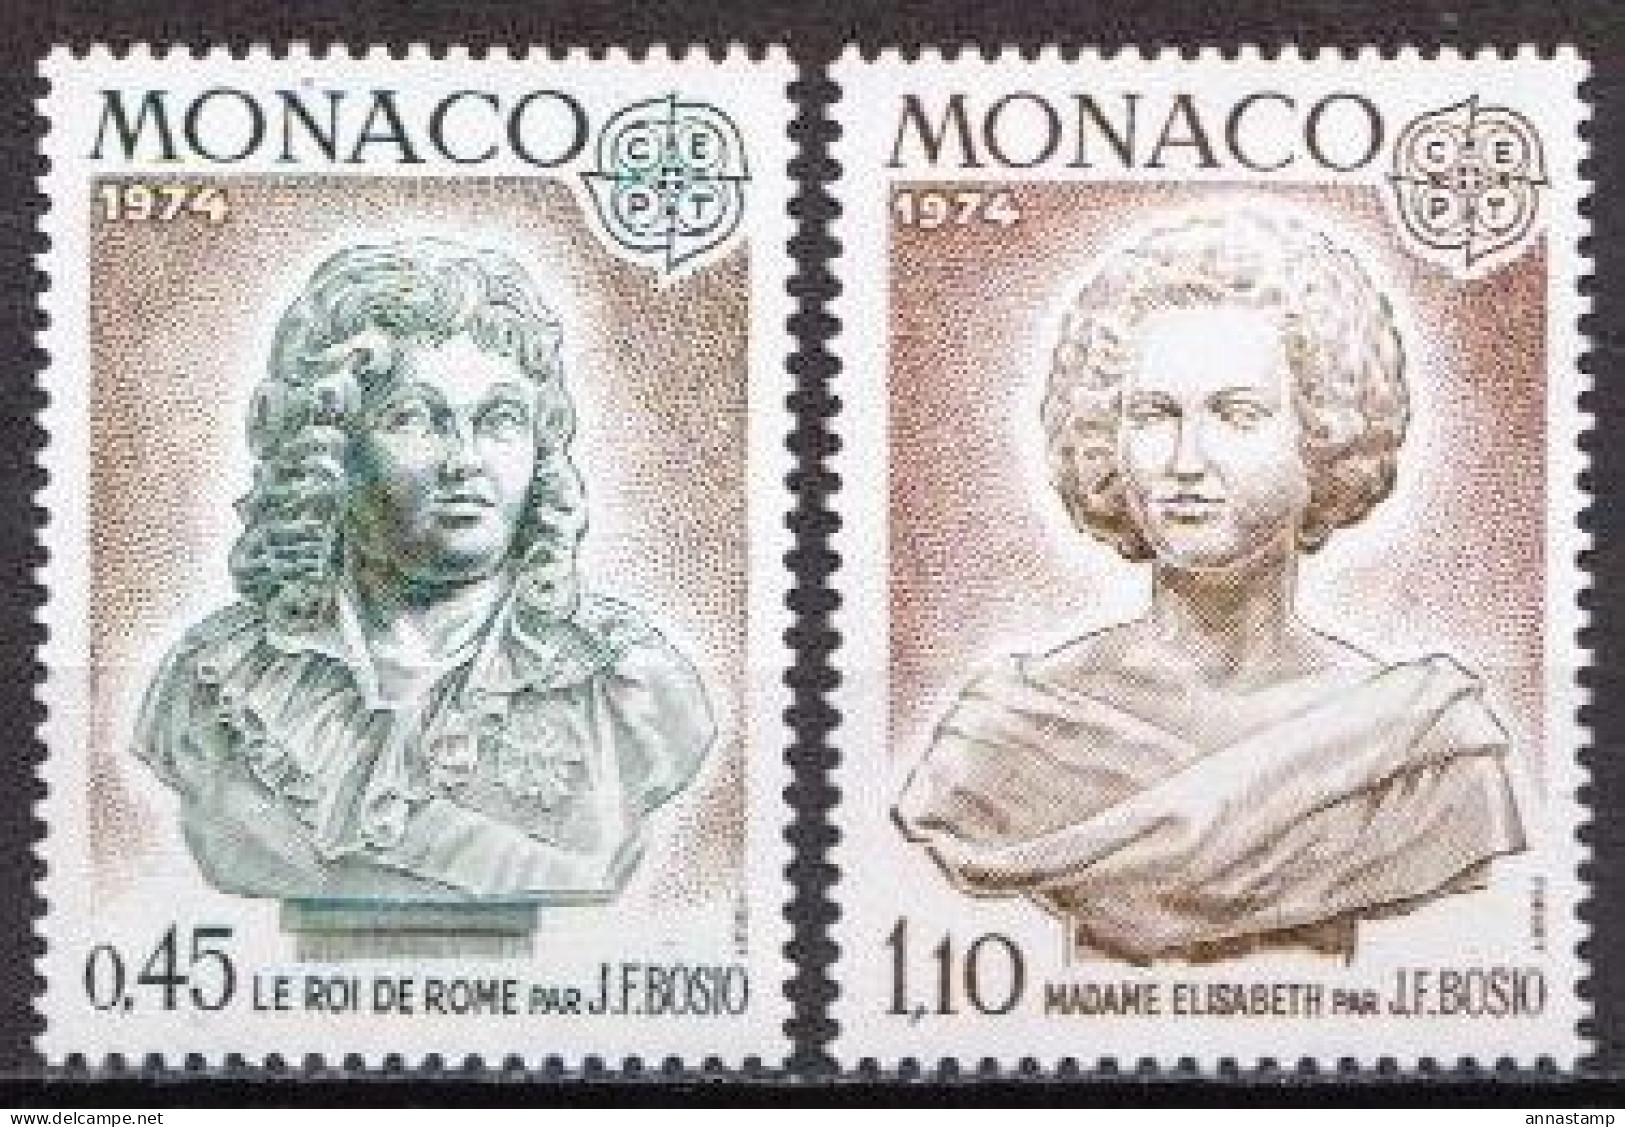 Monaco MNH Set - 1974